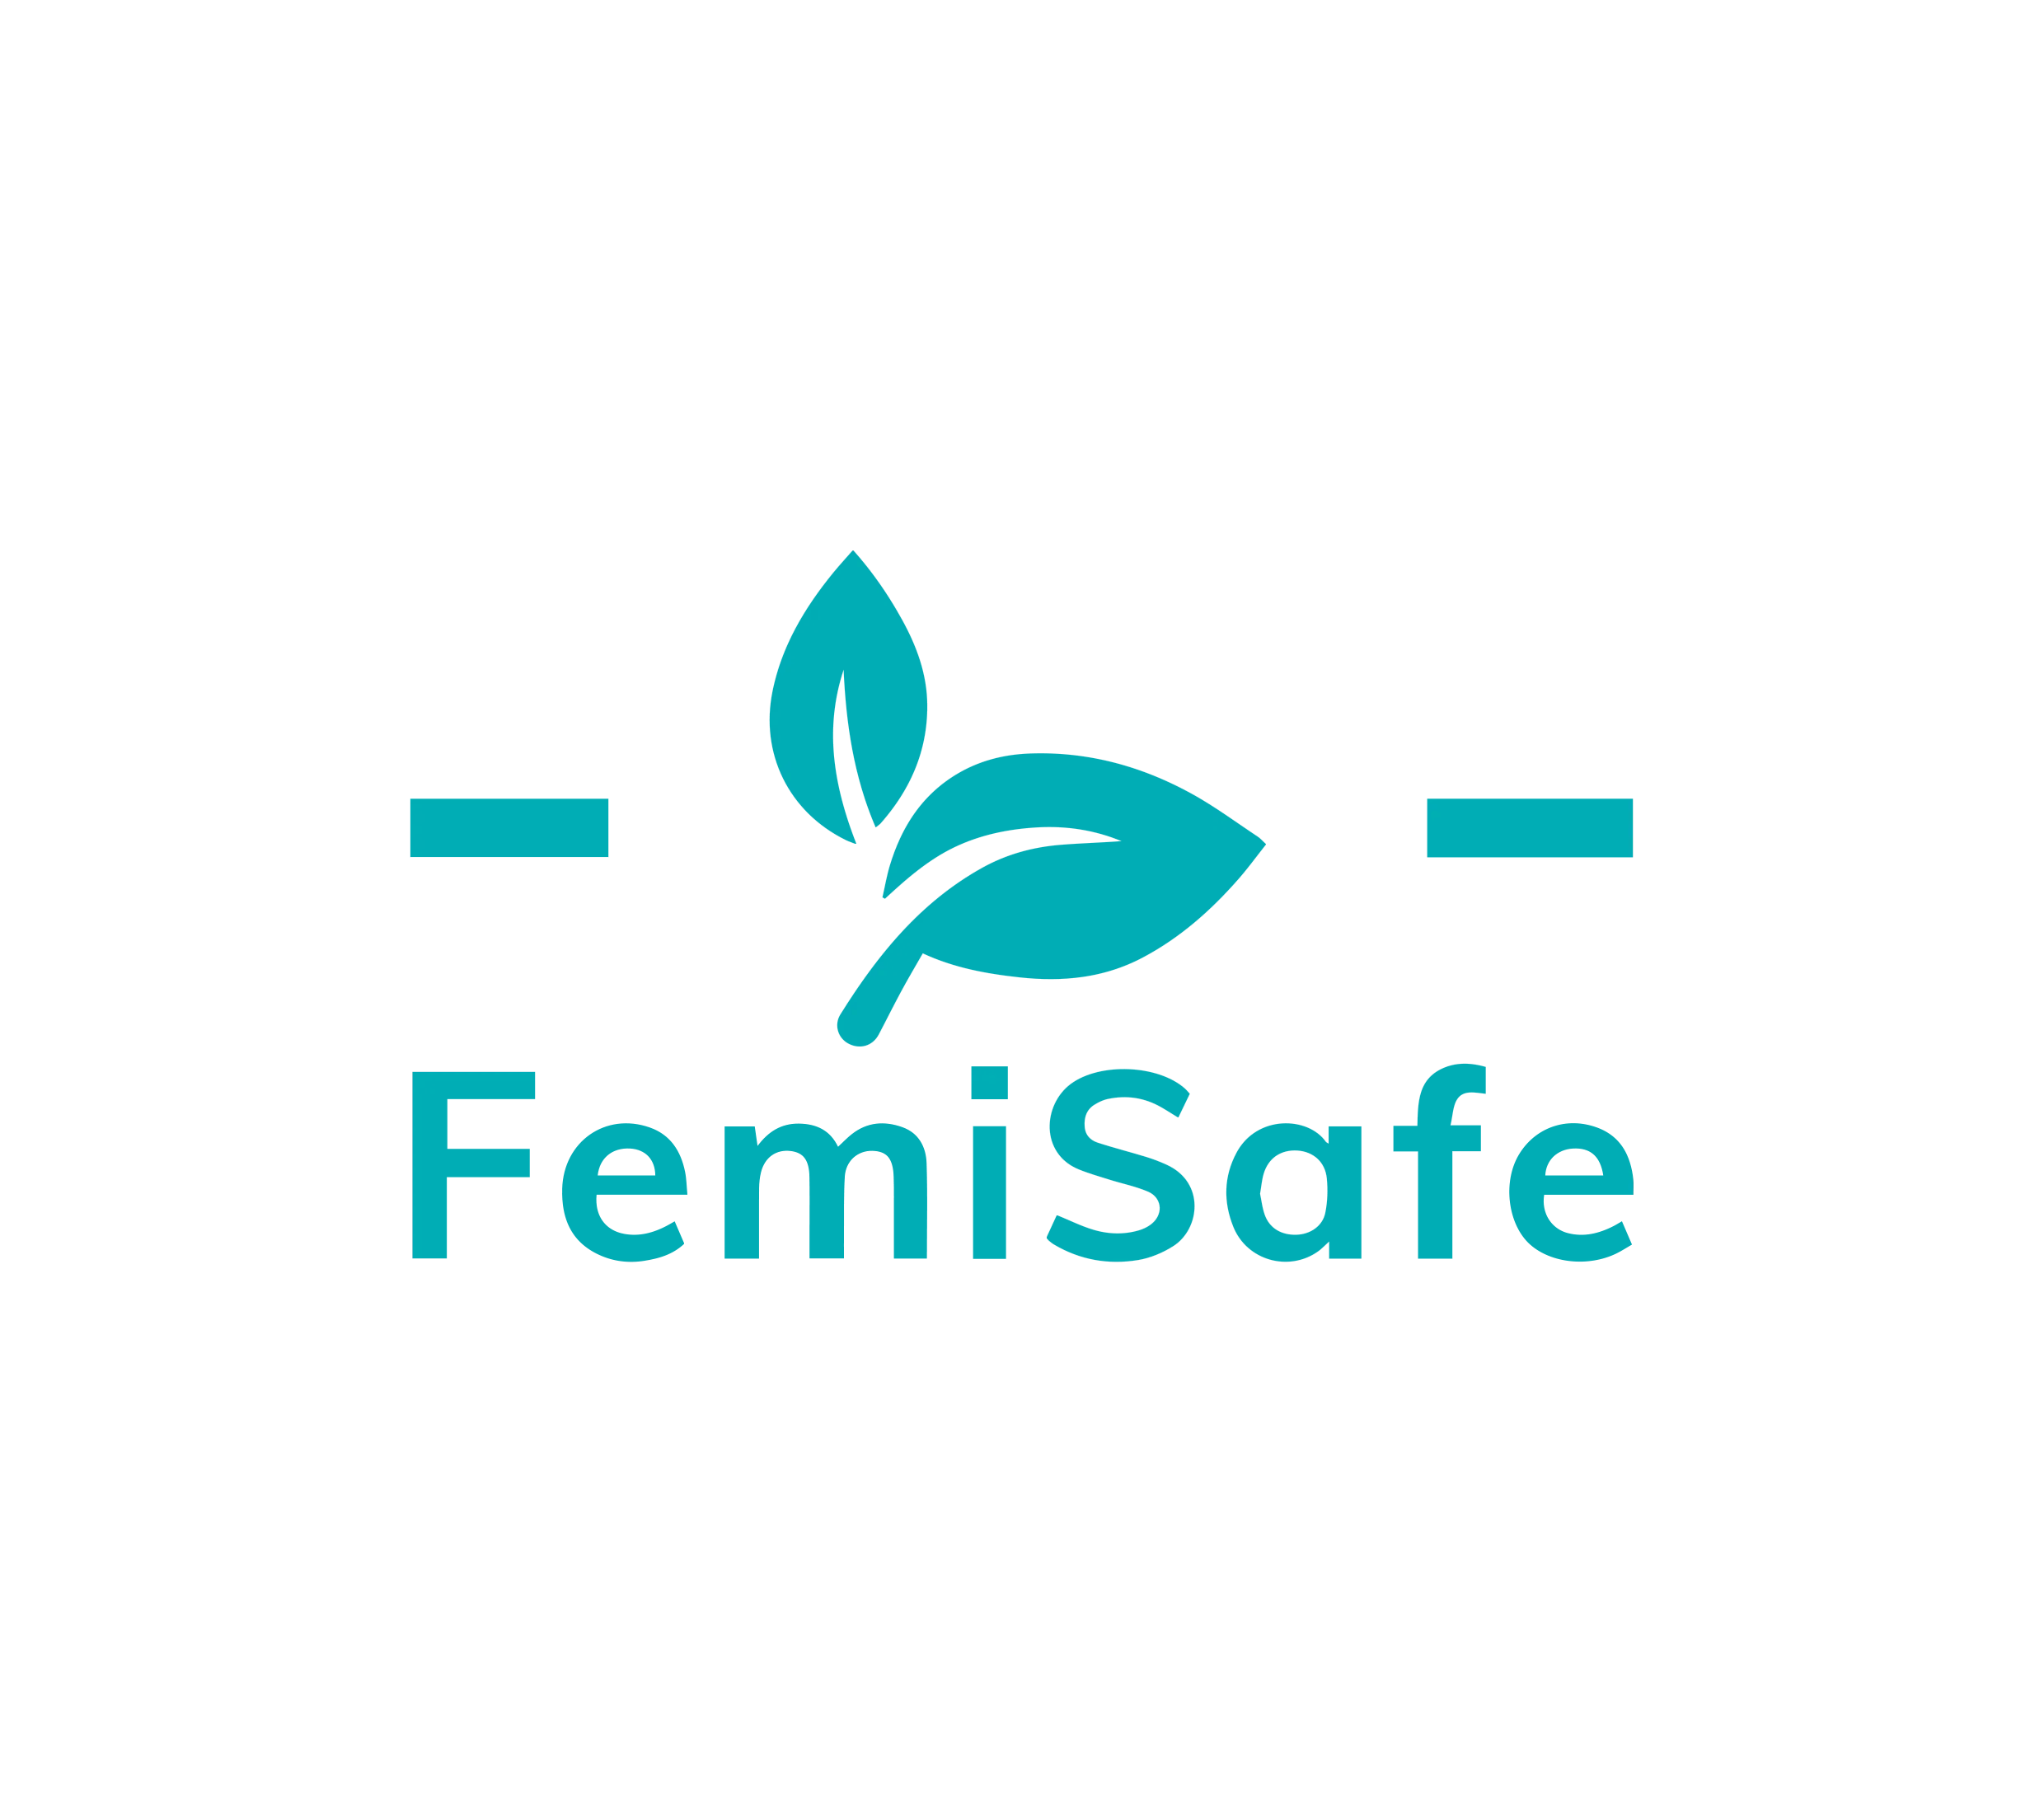 Femisafe India Private Limited